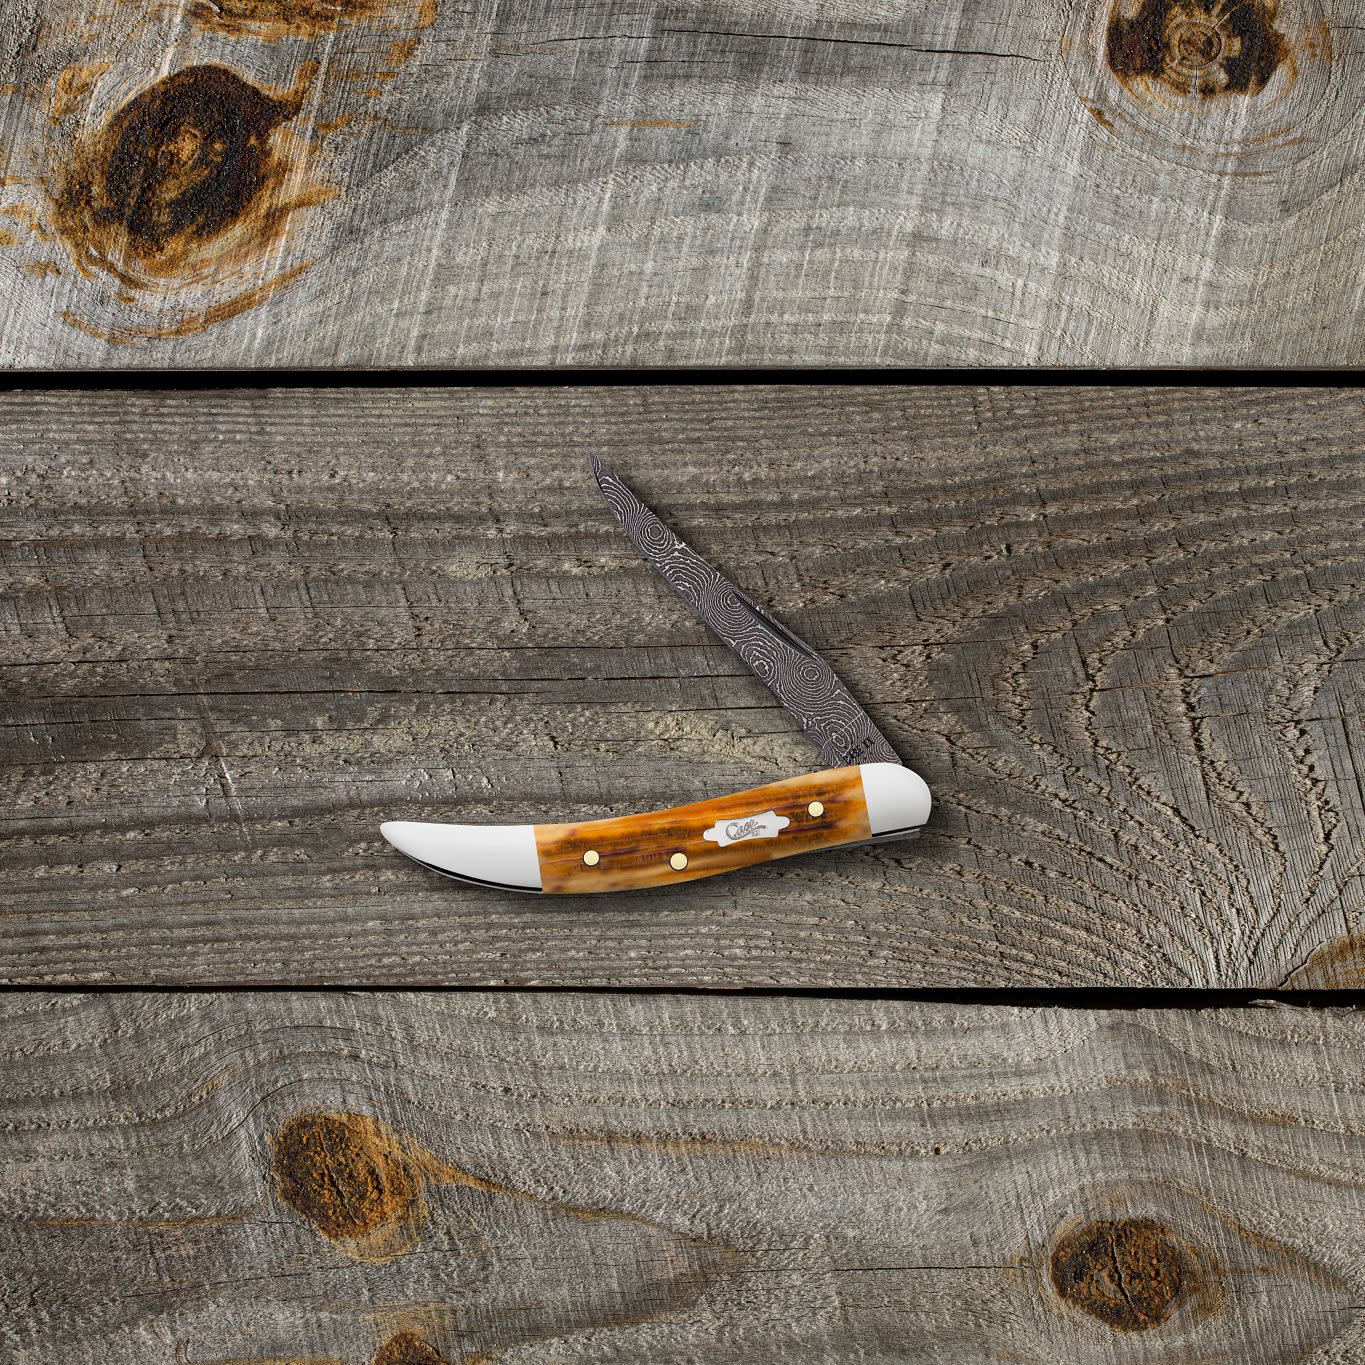 Second Cut Jig Burnt Goldenrod Damascus Medium Texas Toothpick on a Wooden Background